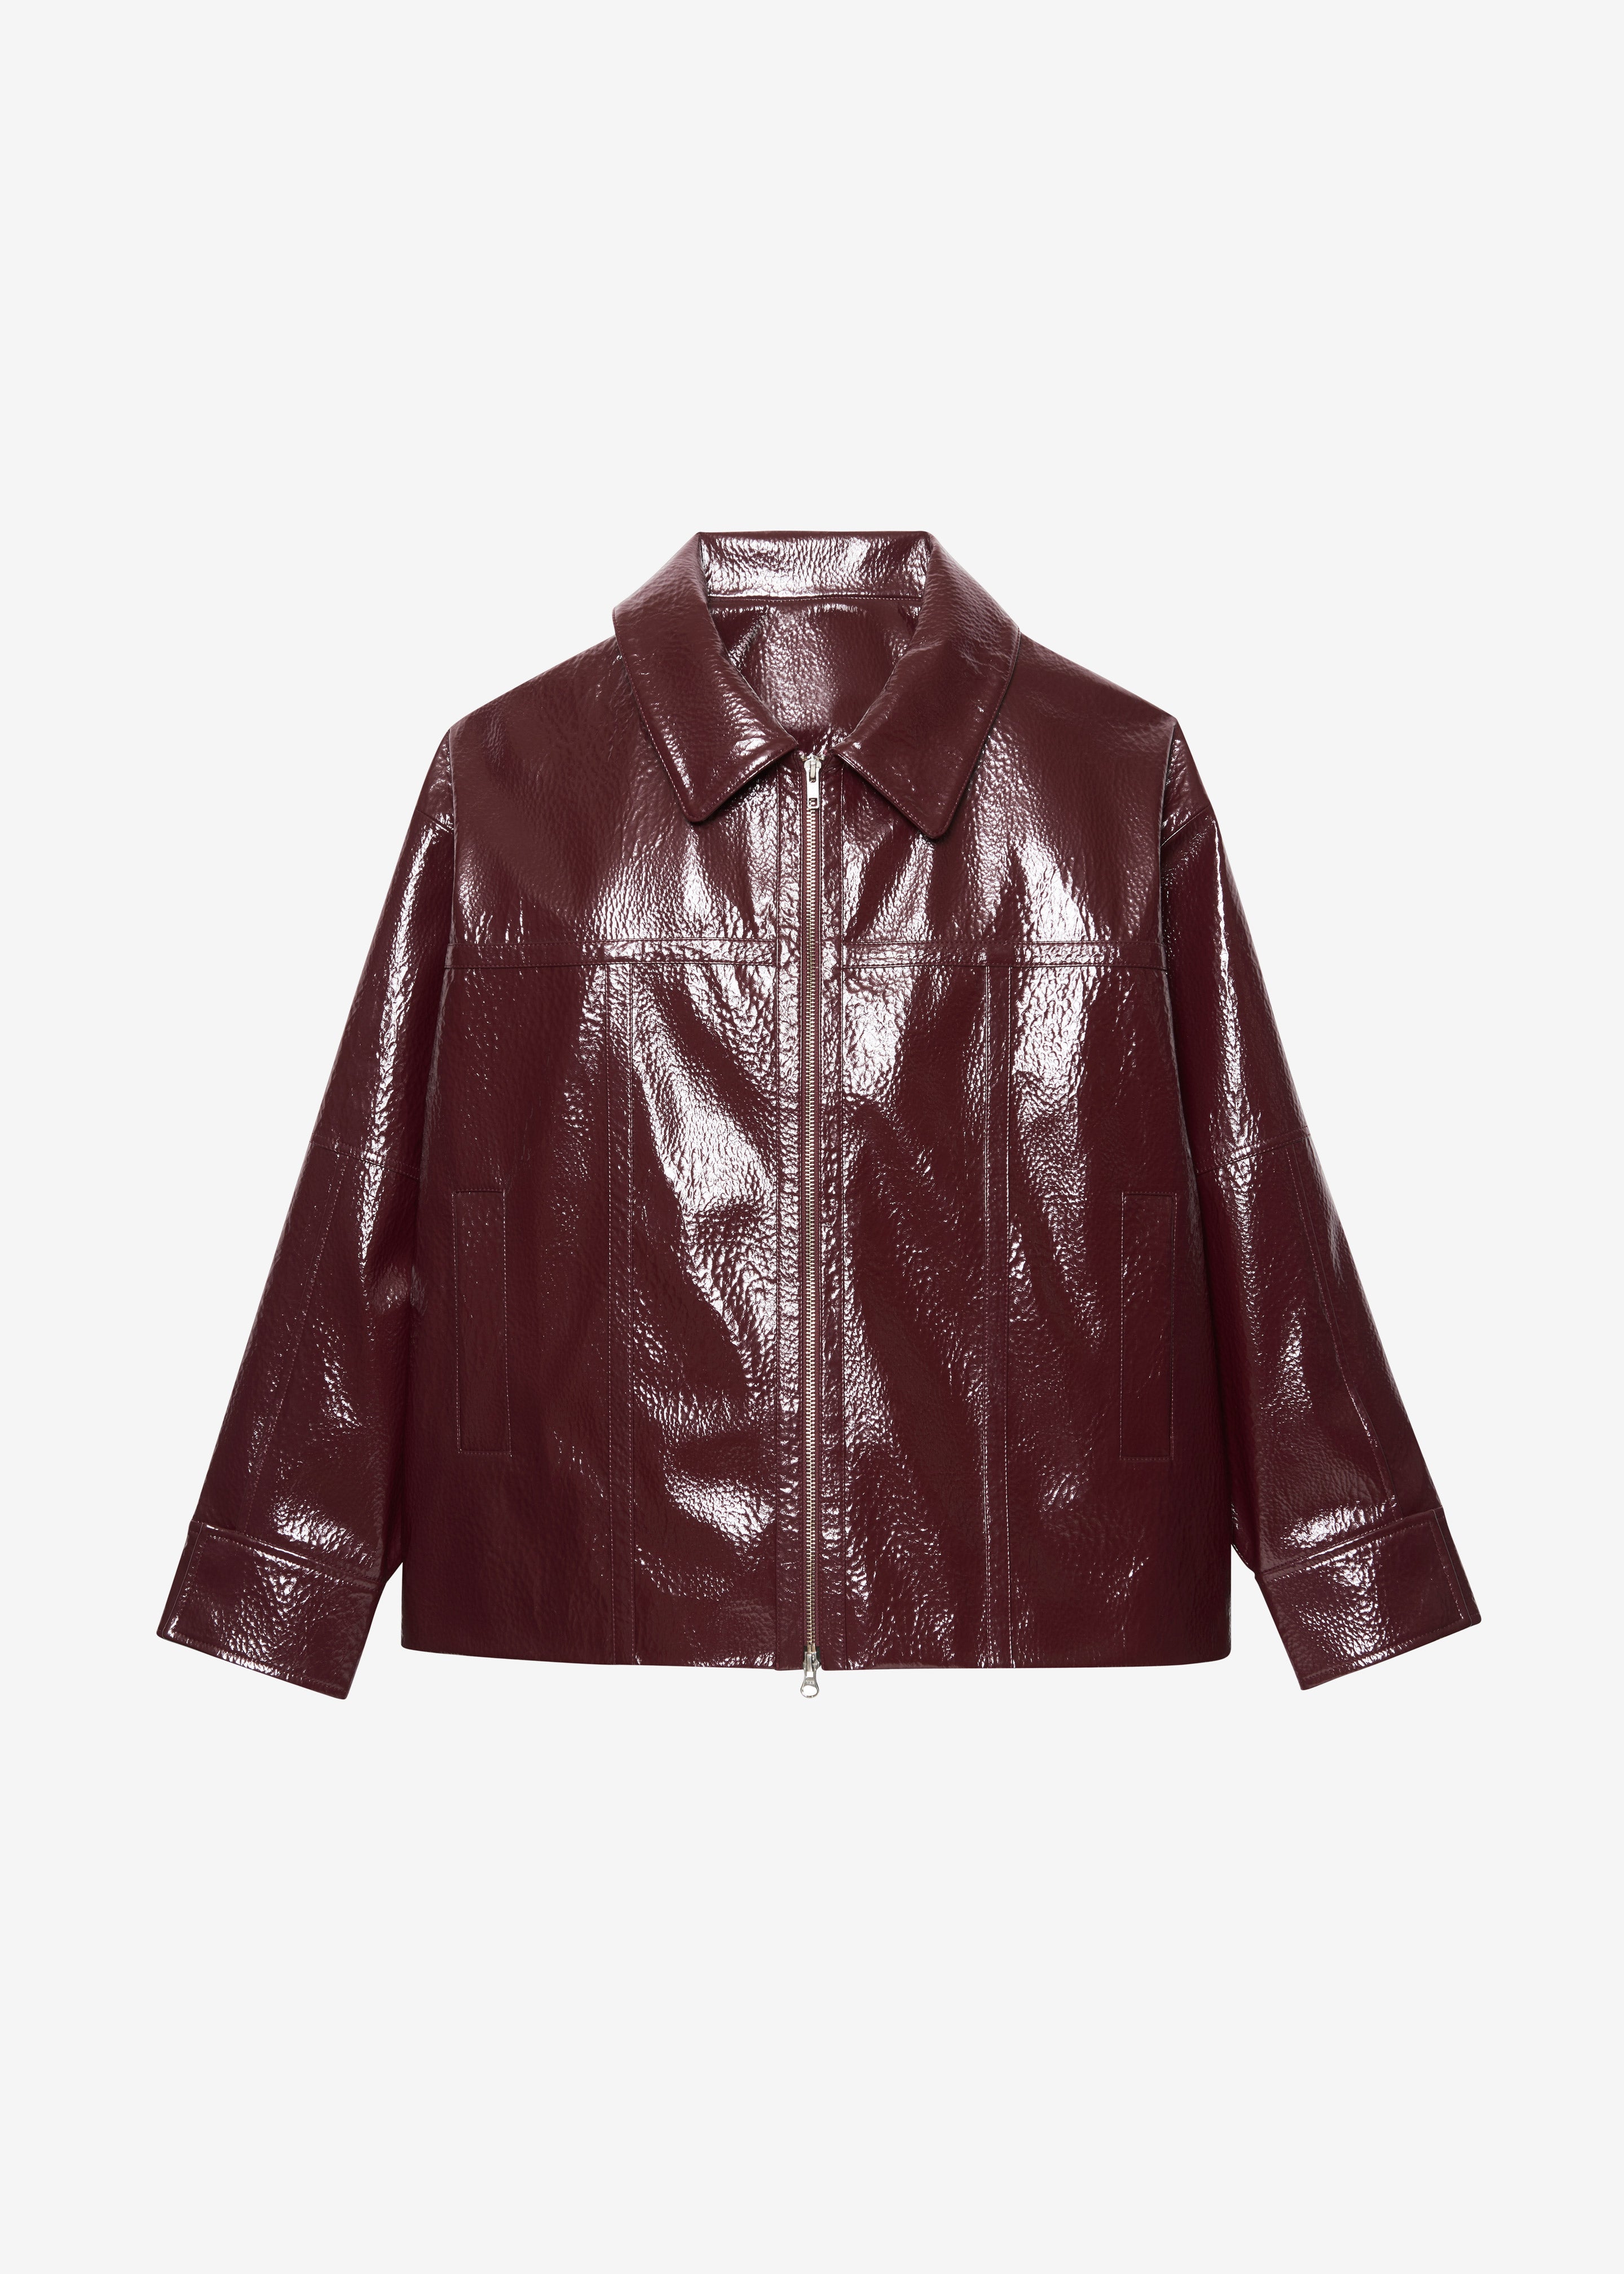 Arbor Crackled Faux Leather Jacket - Burgundy - 14